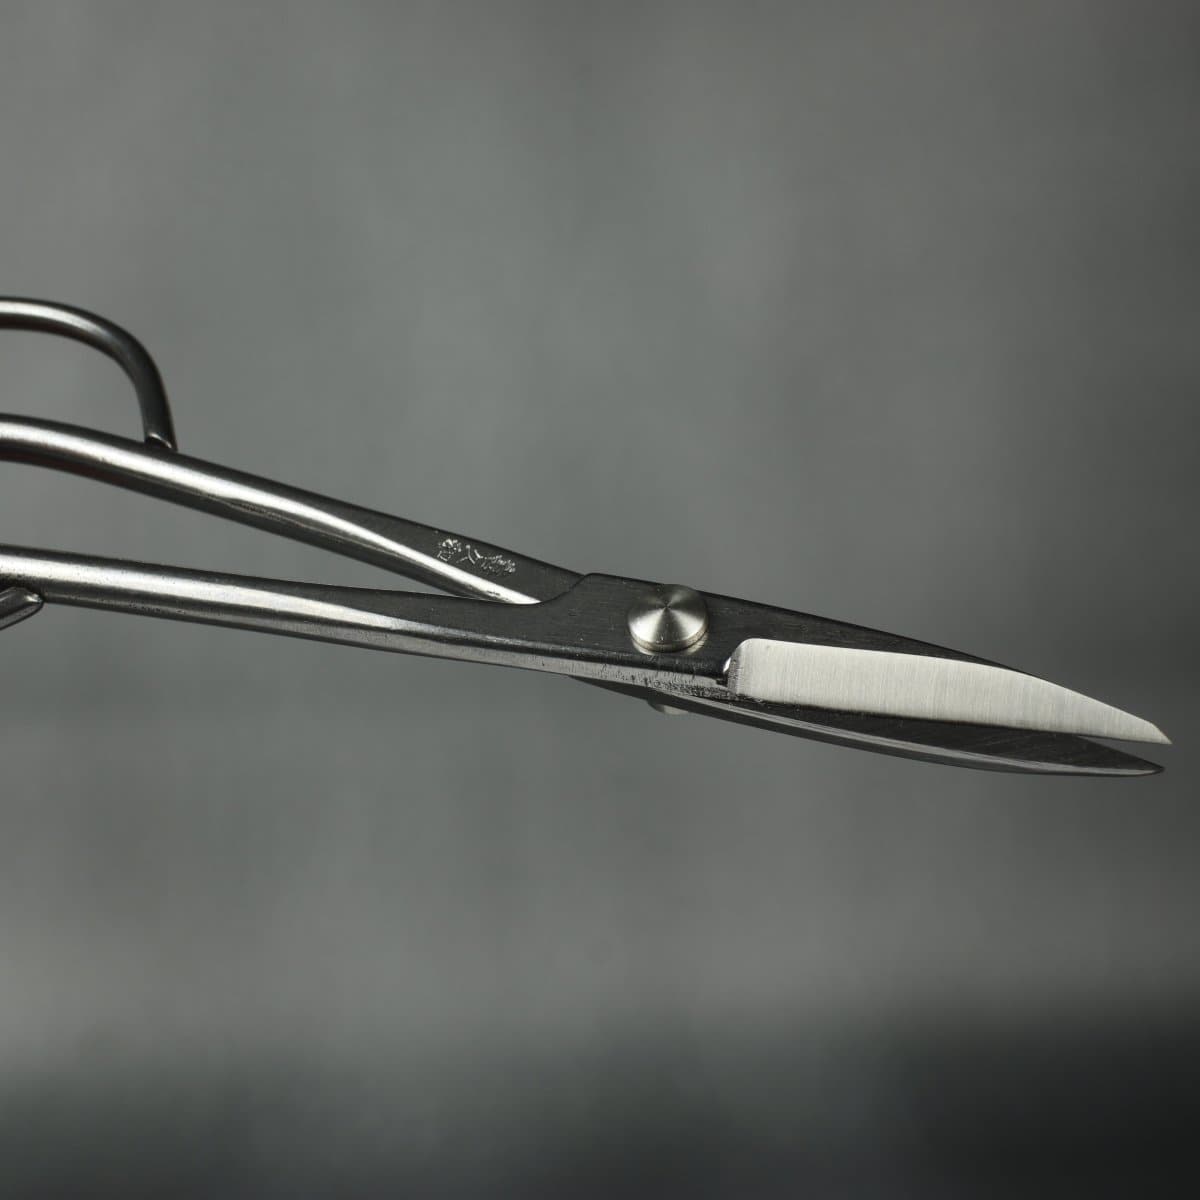 180mm Stainless Steel Bud  Scissors blades